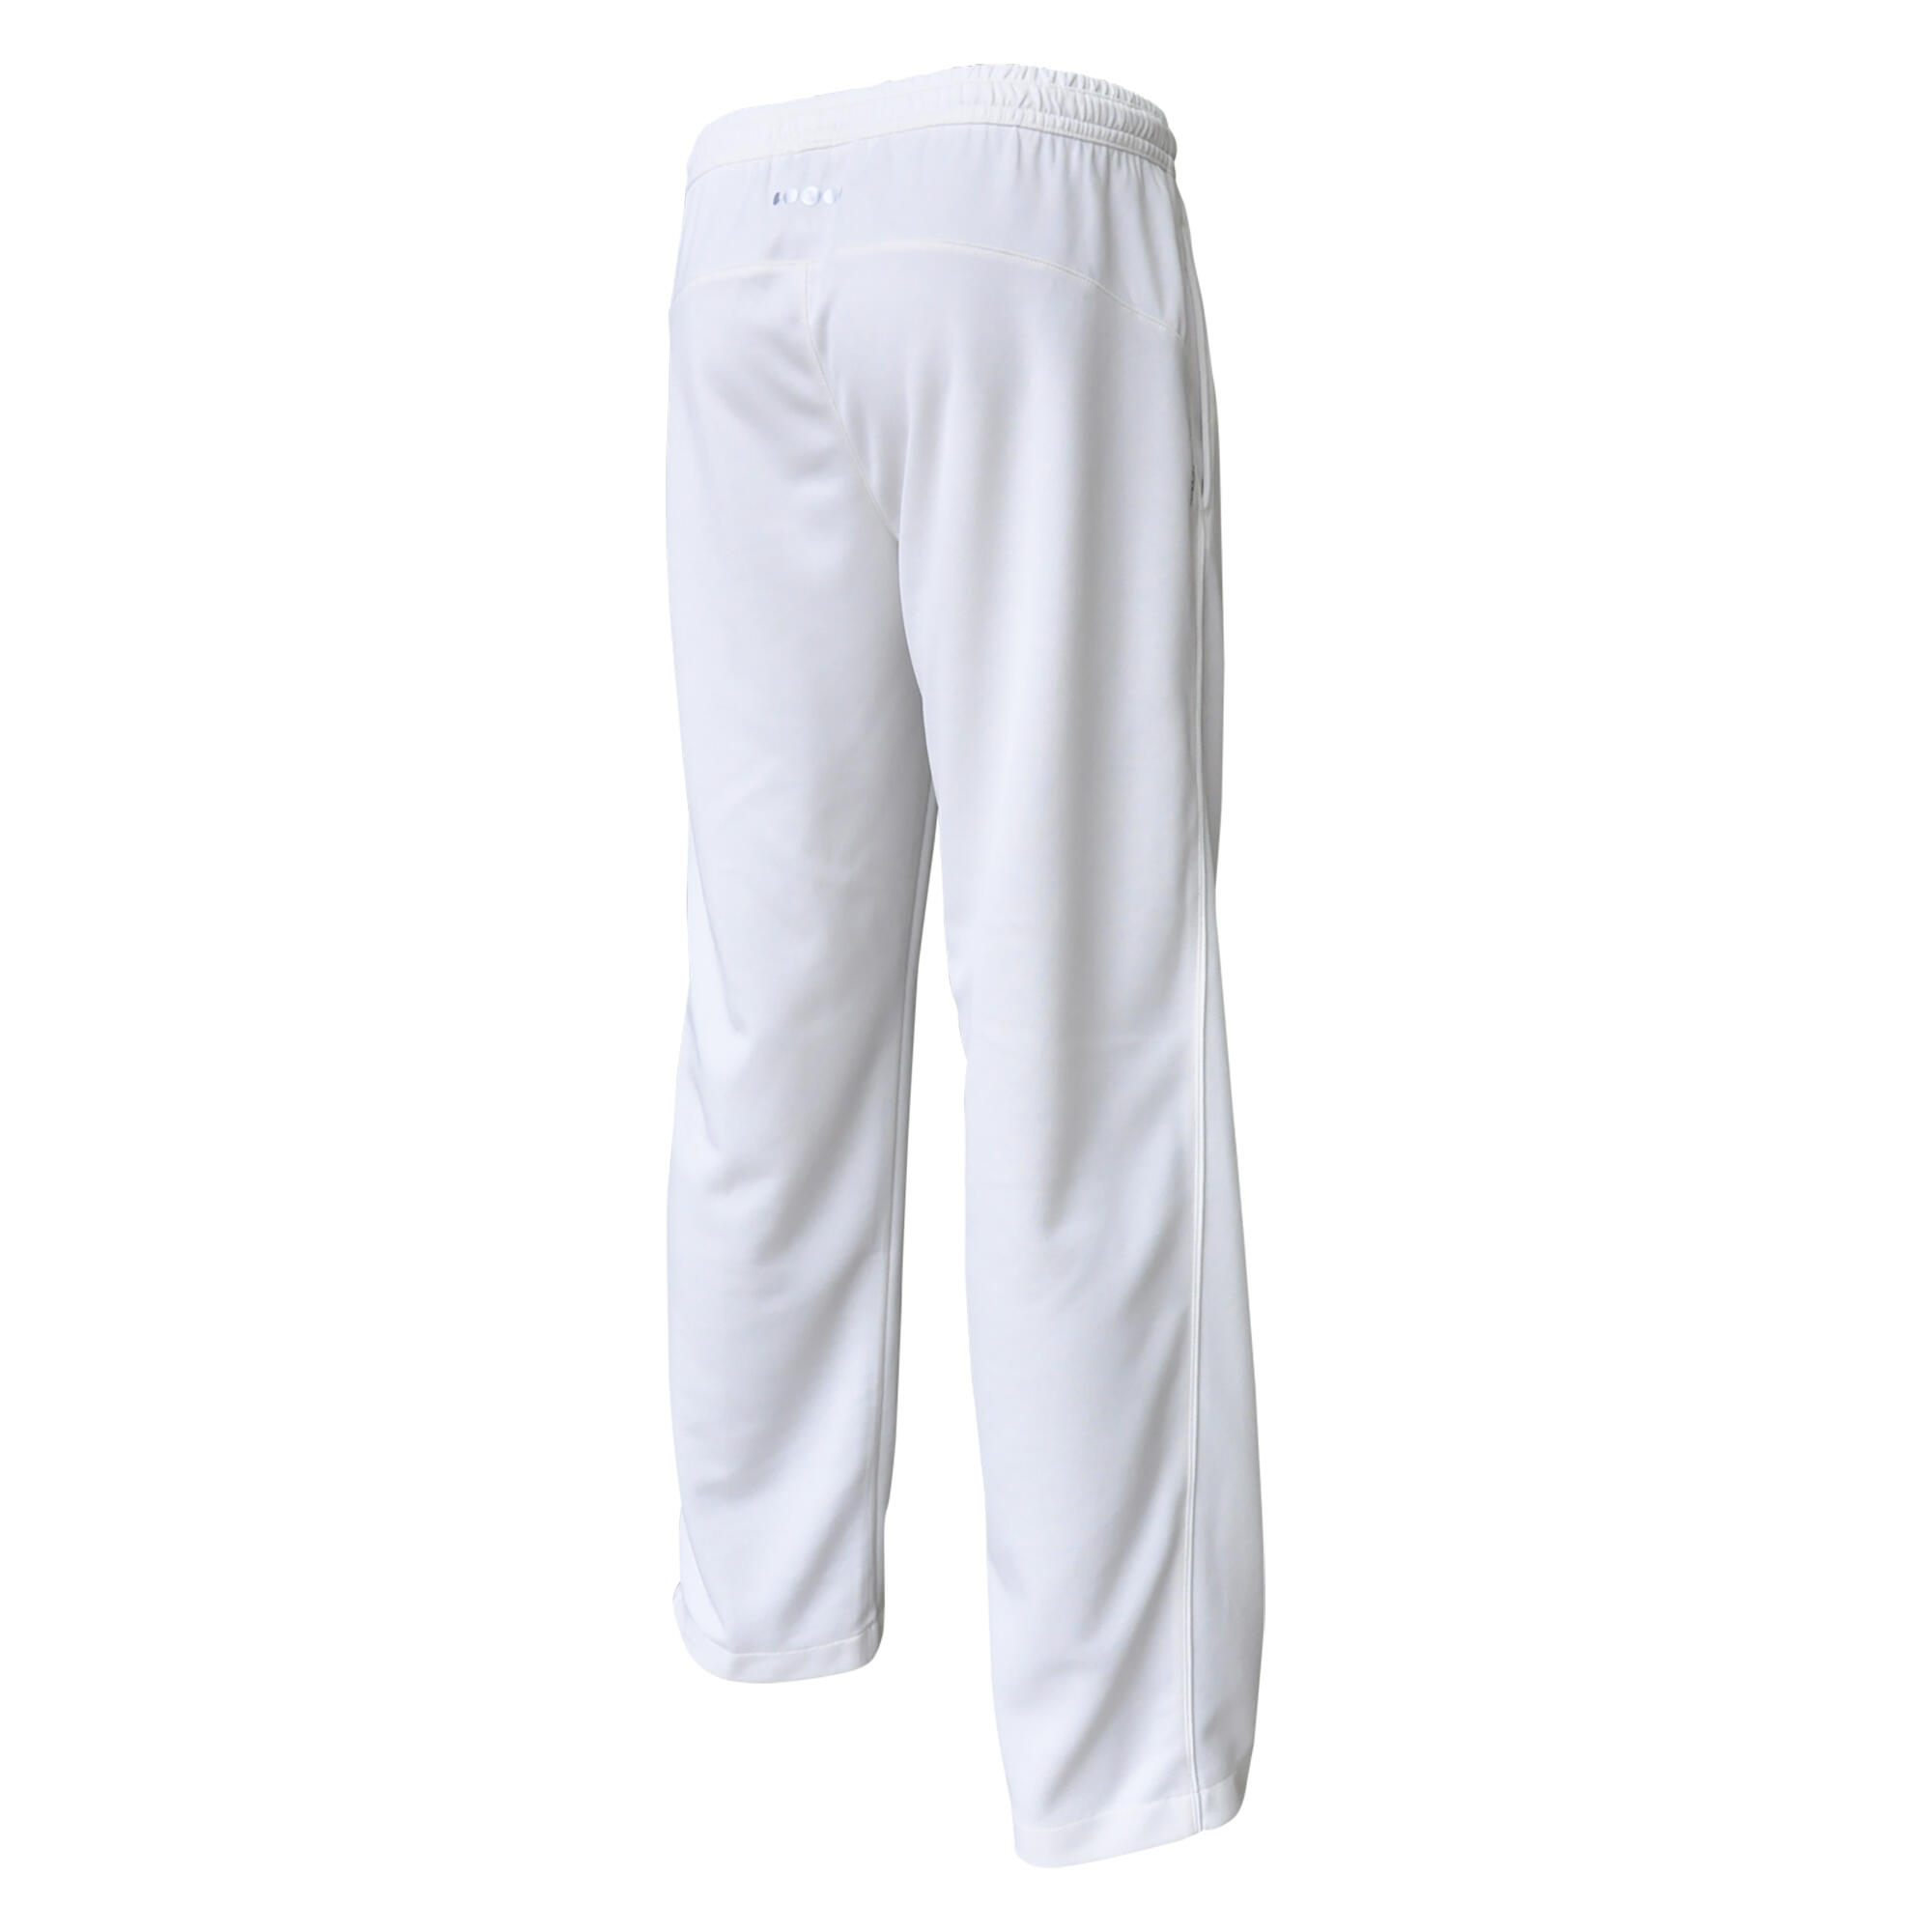 Kookaburra Pro Player Cricket Trousers White 2/2